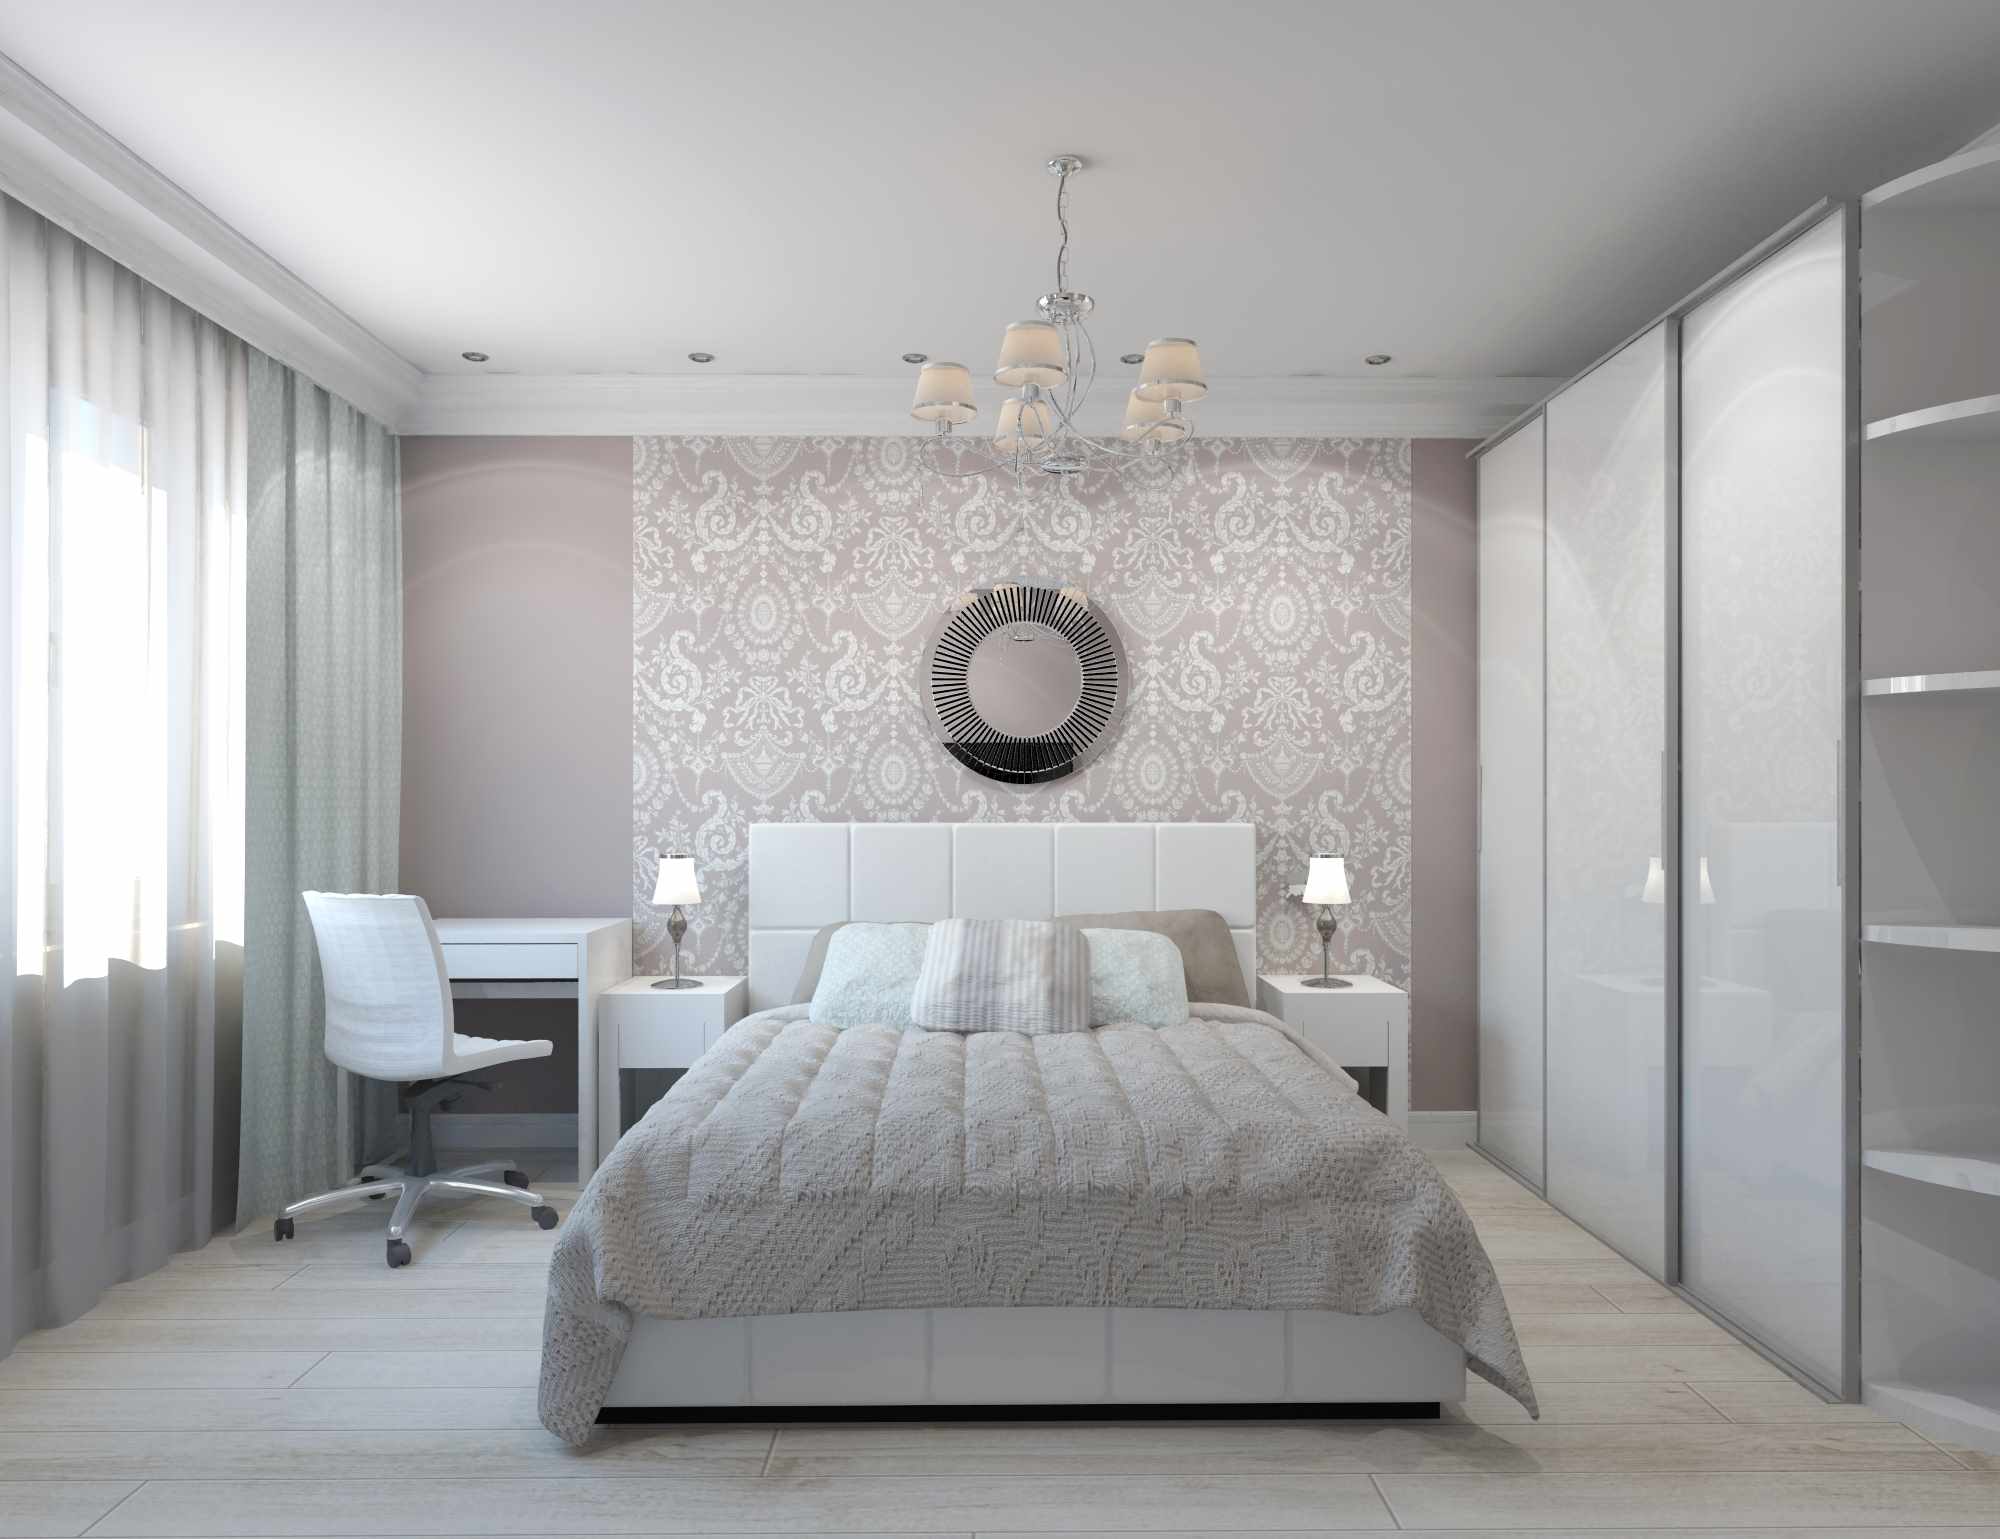 variant of a beautiful bedroom interior design